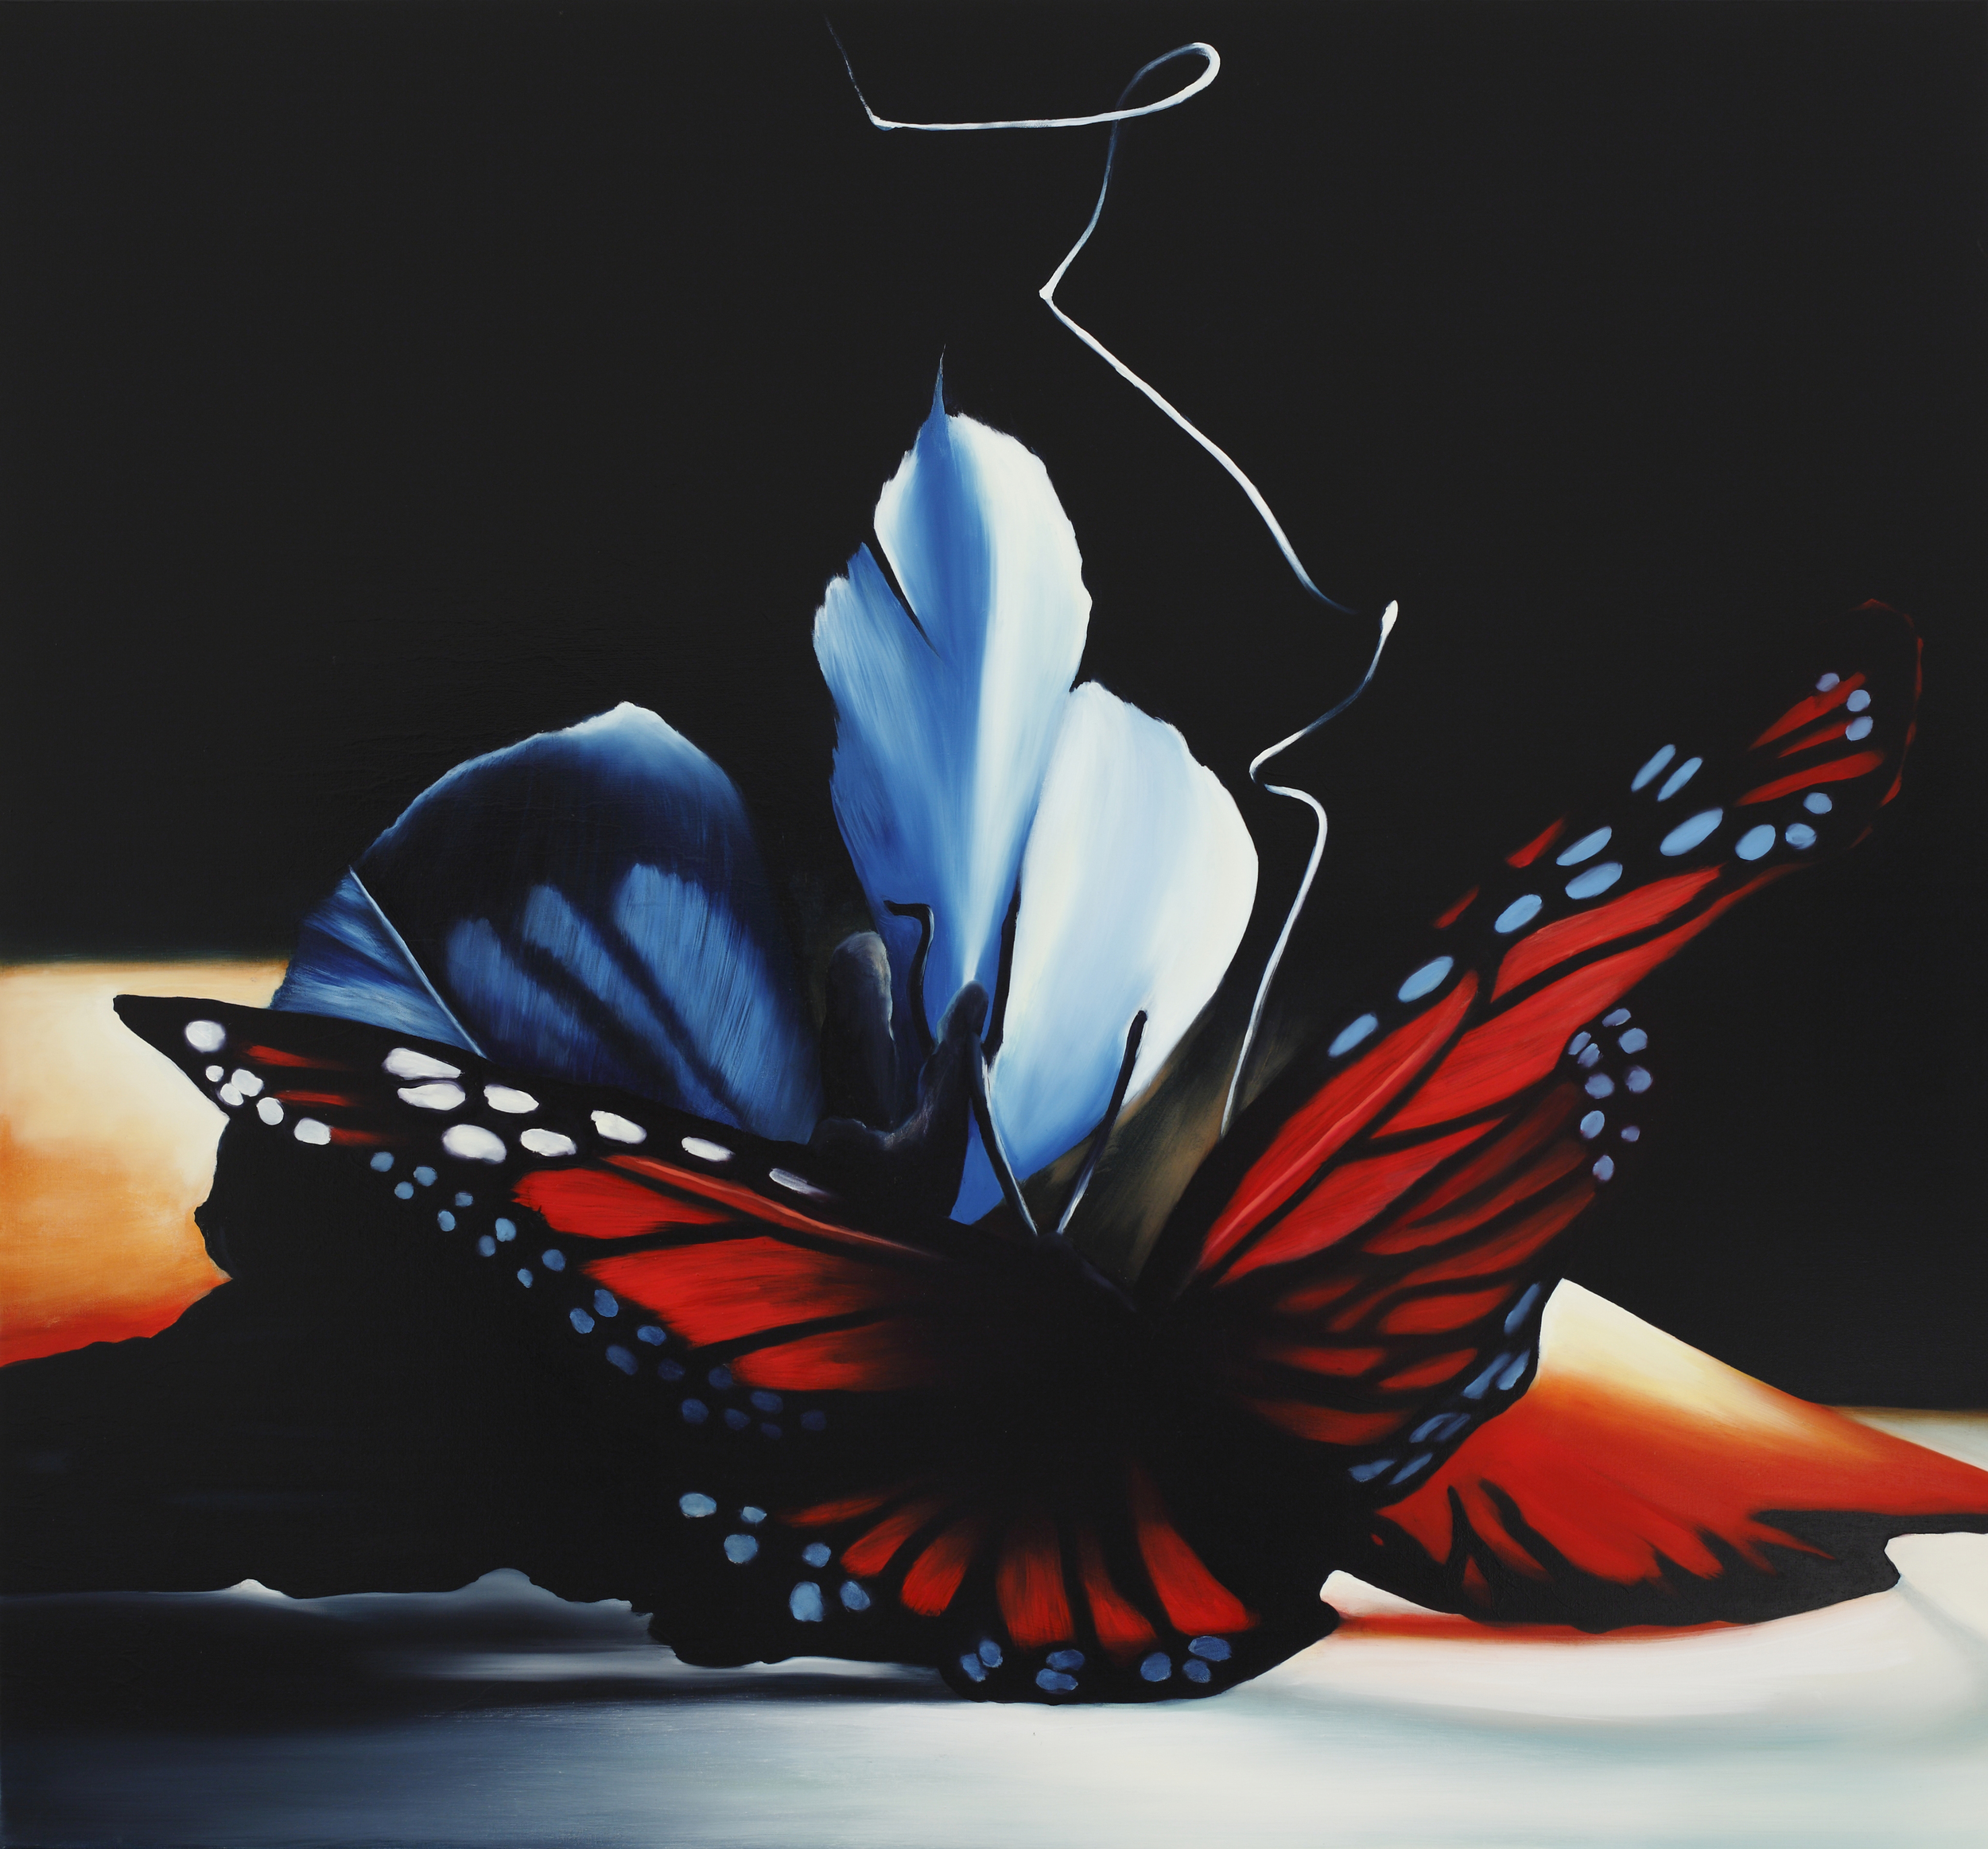 Seraphim, 48" x 52", Oil on Canvas, 2011